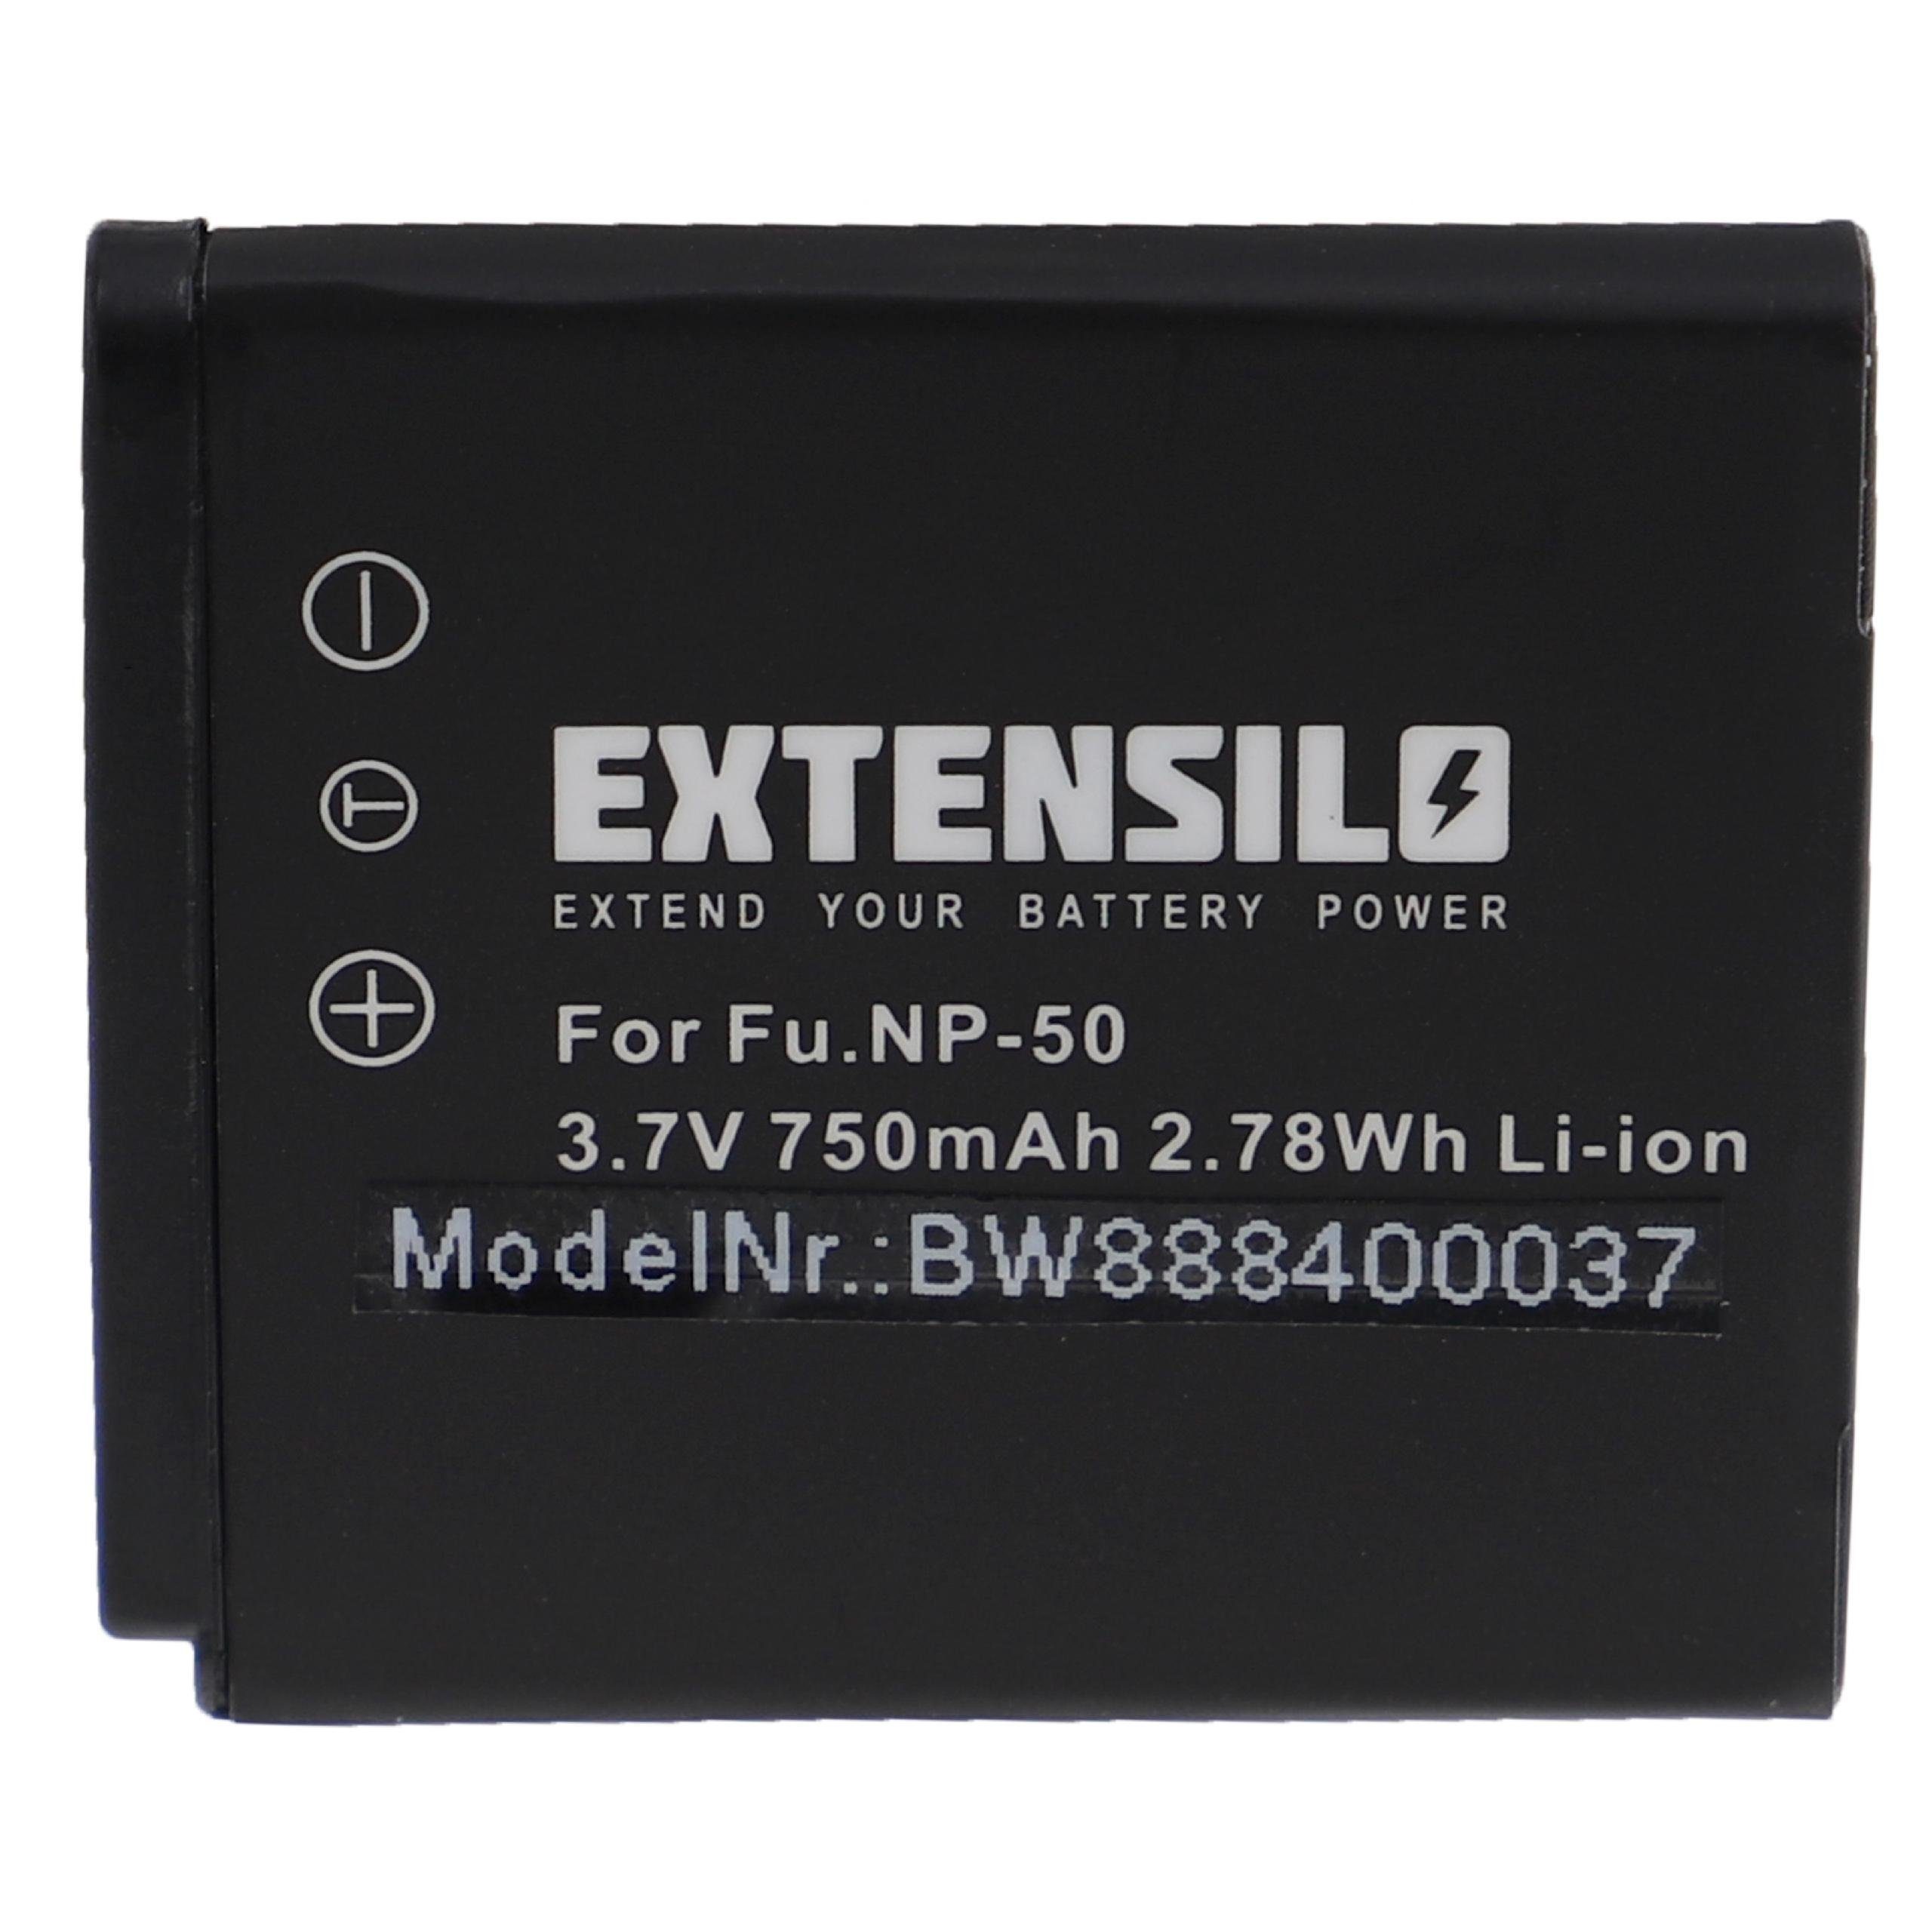 Extensilo kompatibel mit General Imaging E840, G1, E840s, G3WP, G3, G2 Kamera-Akku Li-Ion 750 mAh (3,7 V) | Akkus und PowerBanks